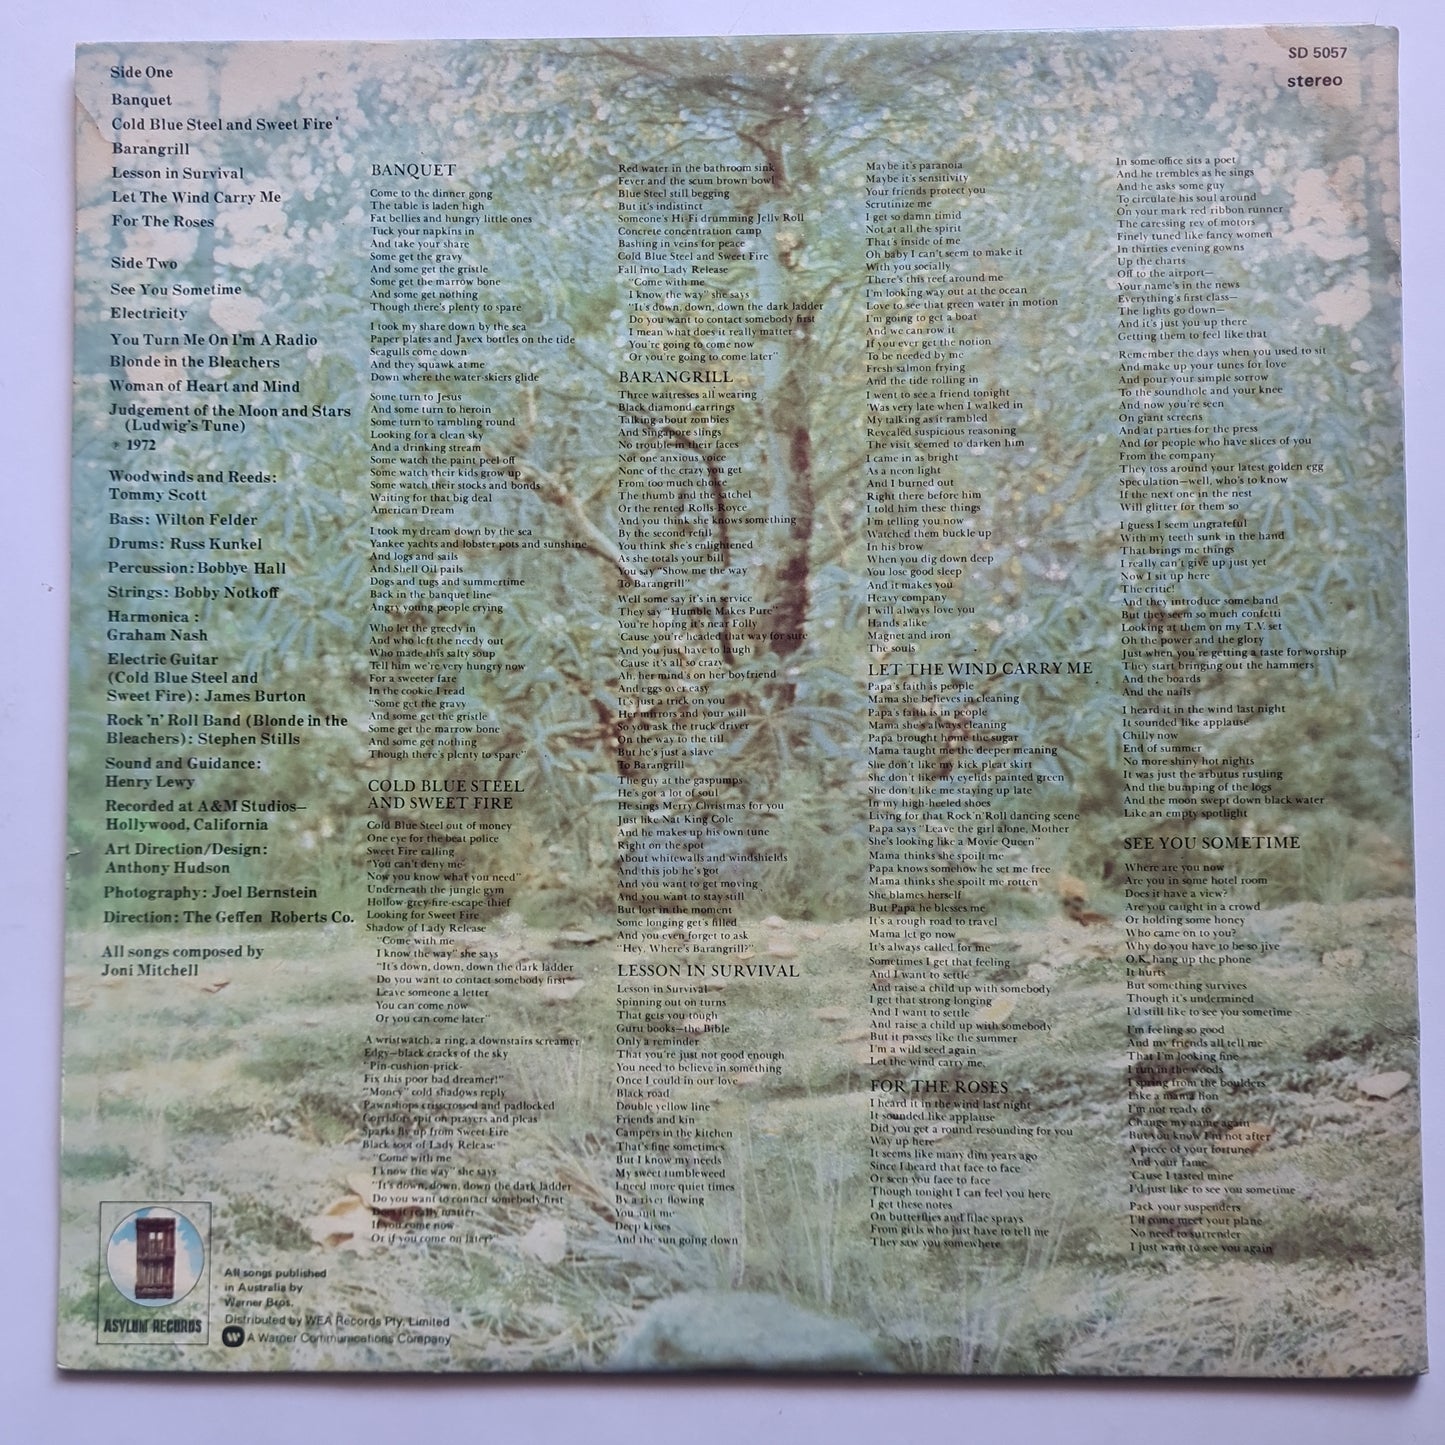 Joni Mitchell – For The Roses - 1972 (Gatefold) -Vinyl Record